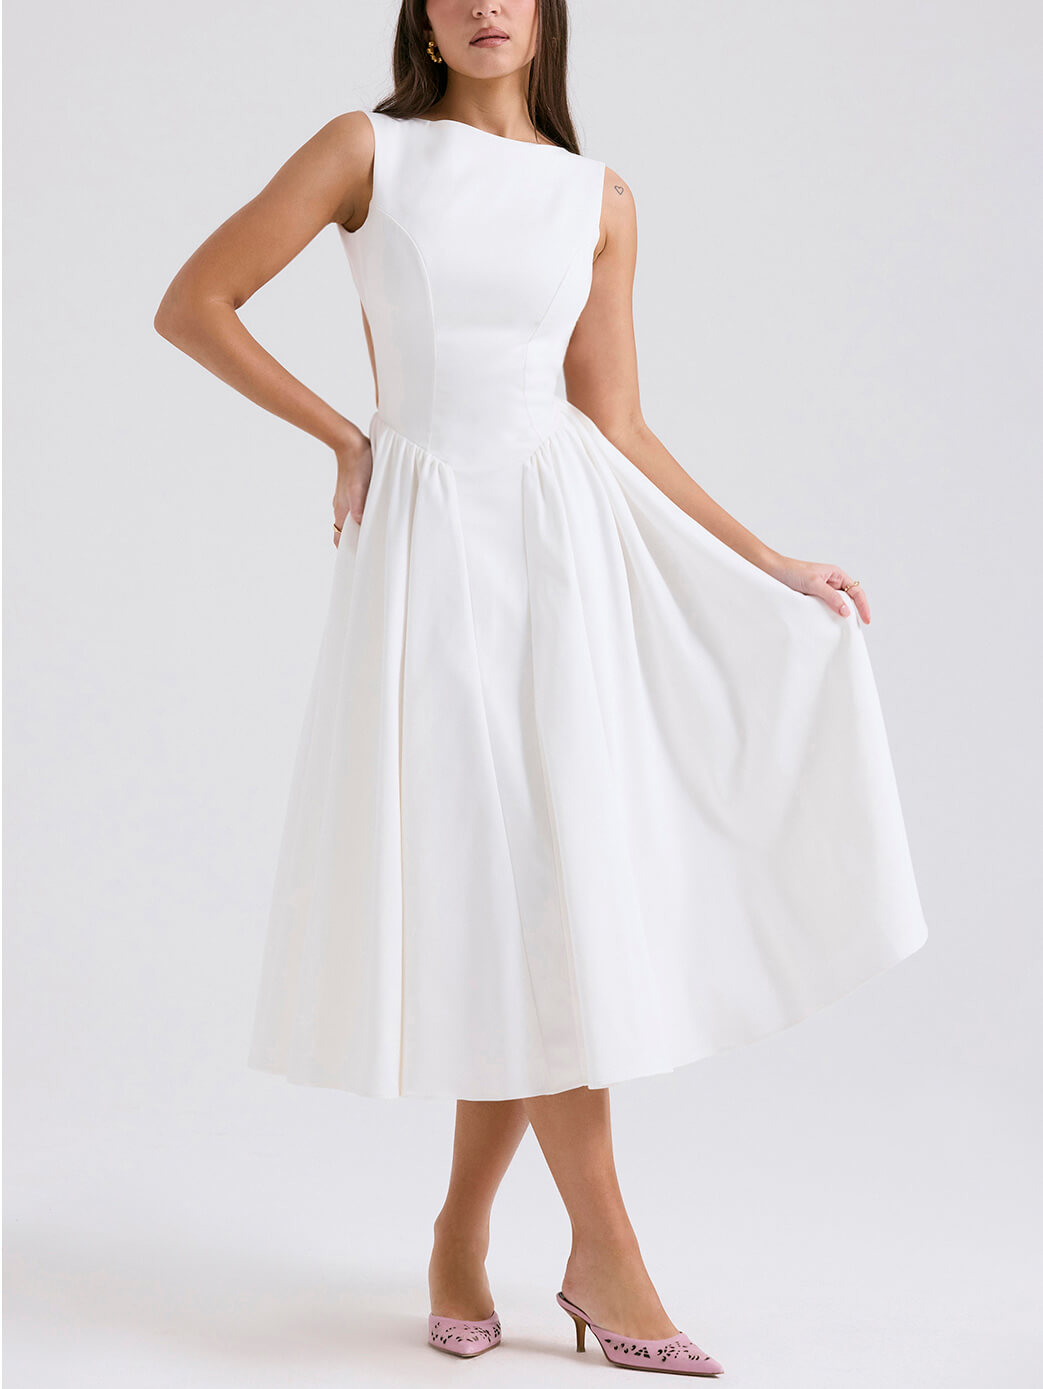 Stylish And Elegant Solid Color Round Neck Backless Sleeveless Midi Dress